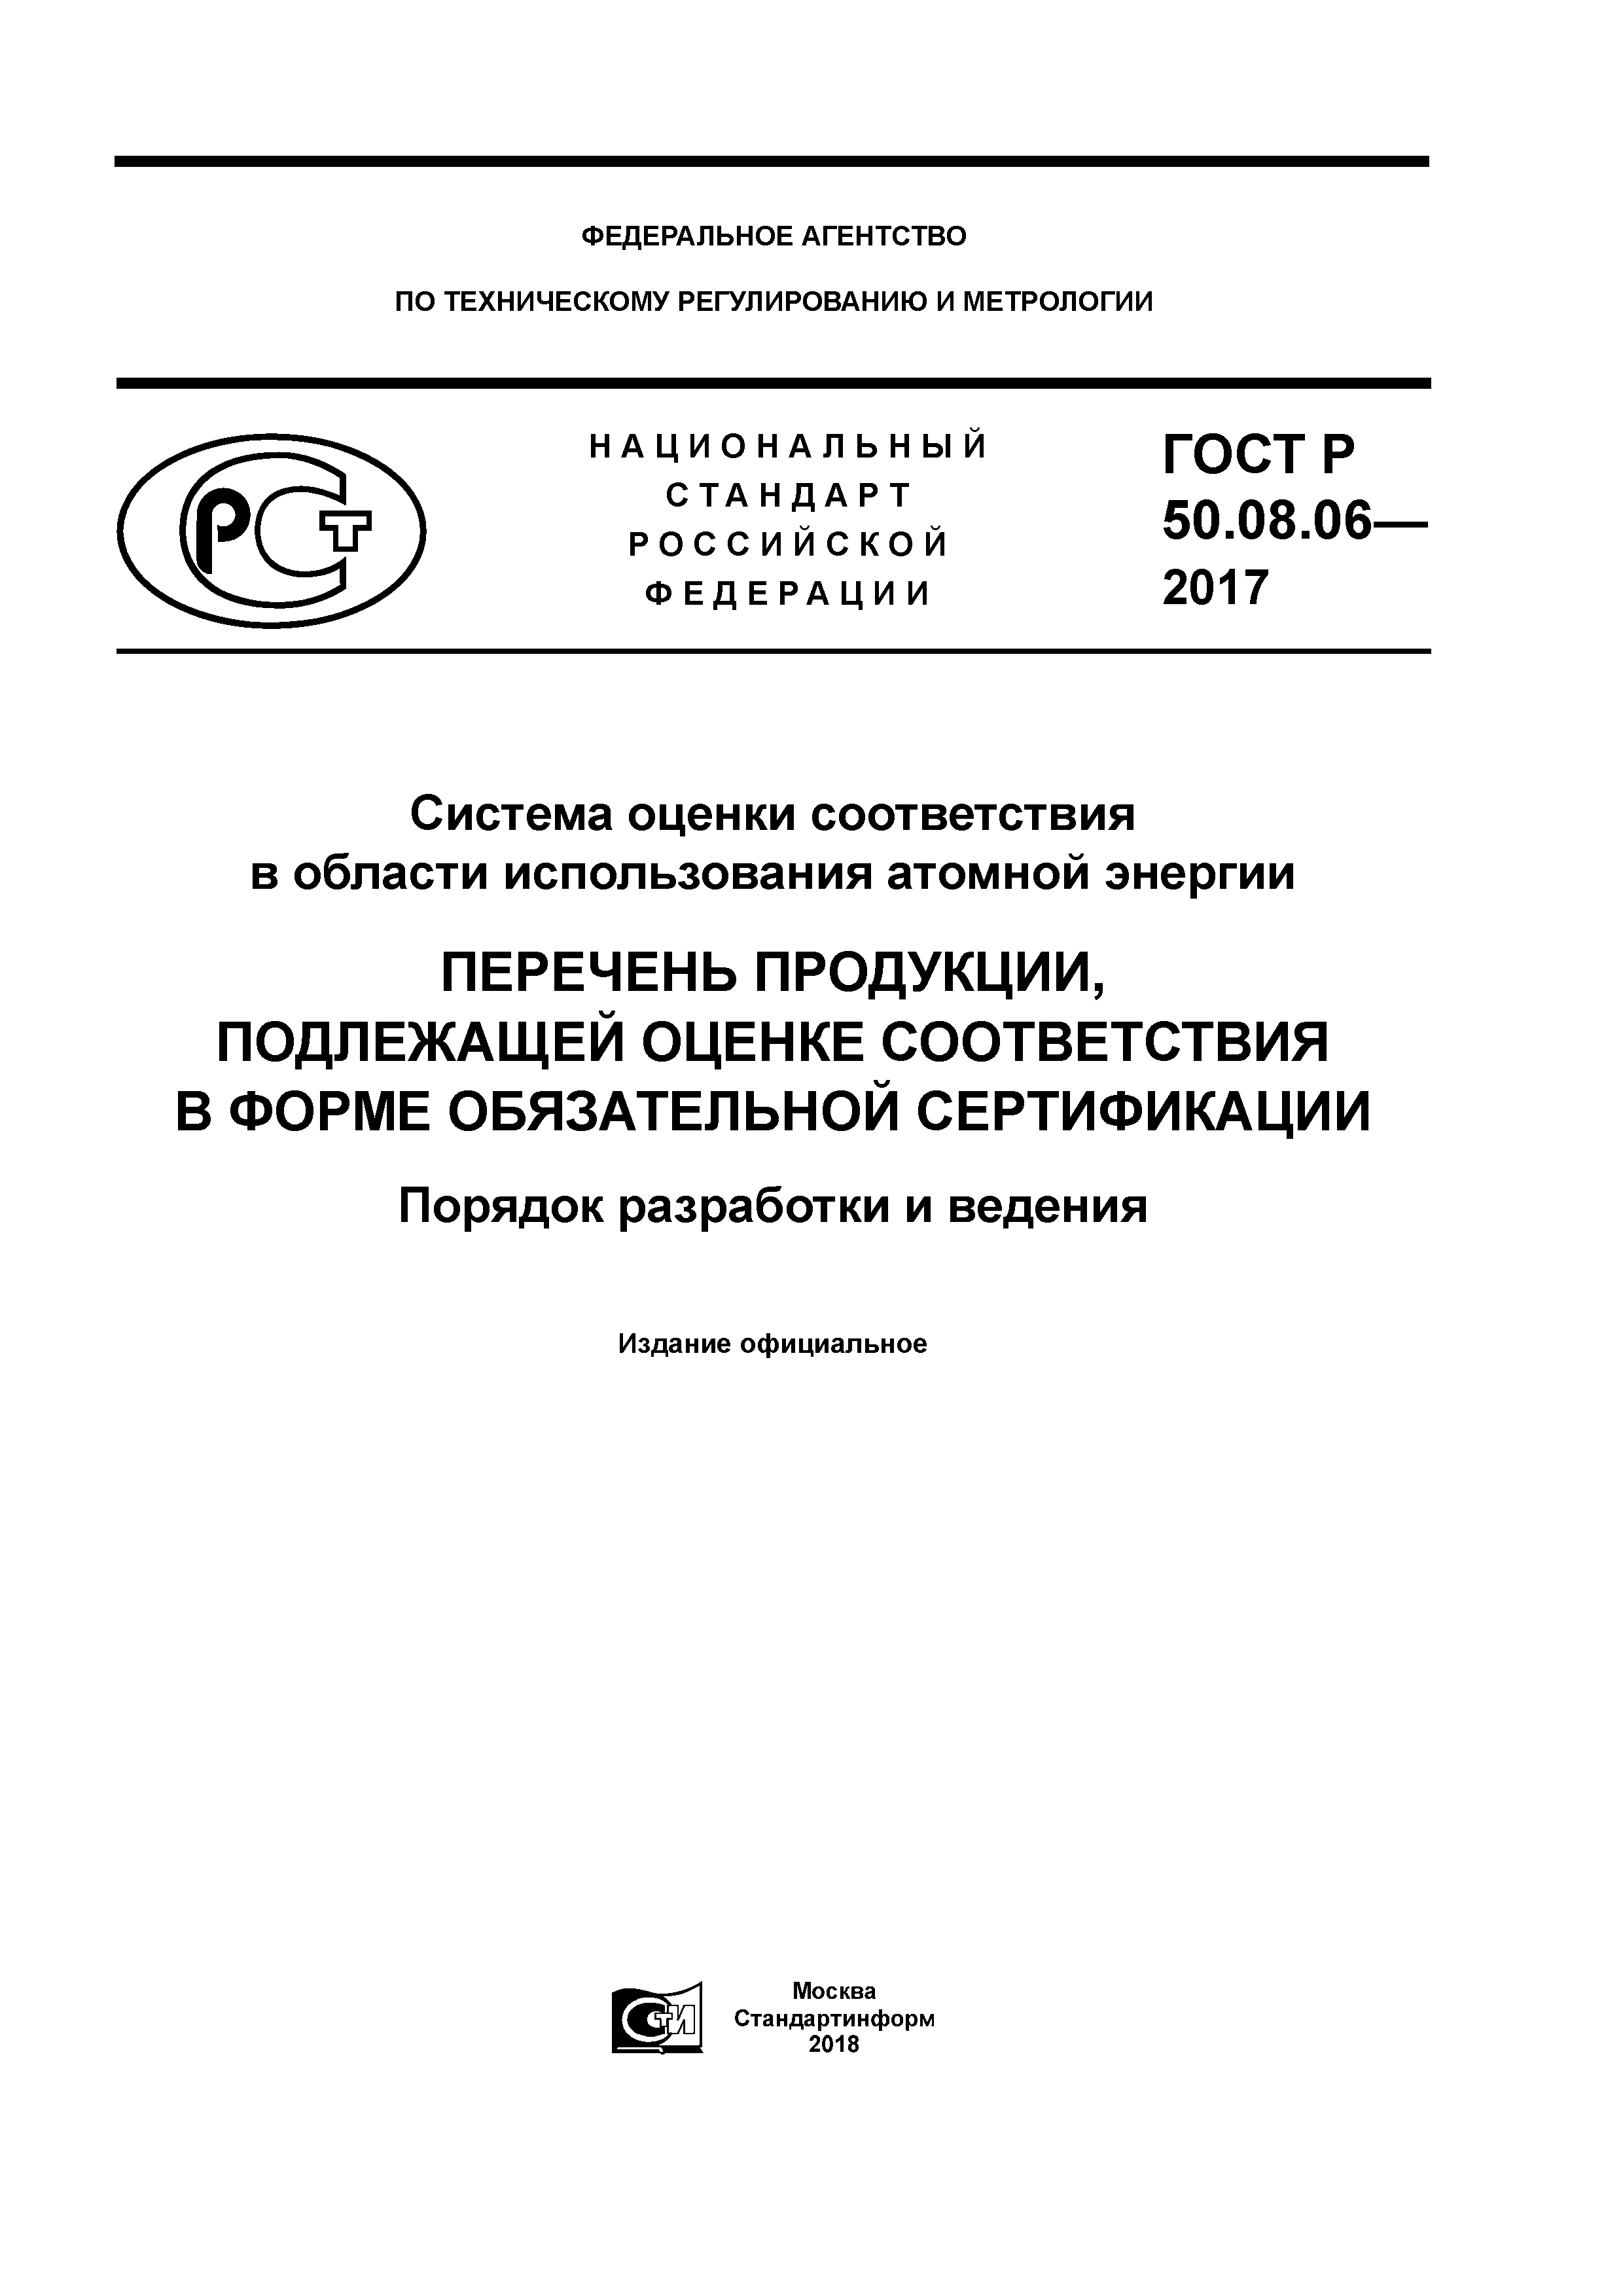 ГОСТ Р 50.08.06-2017